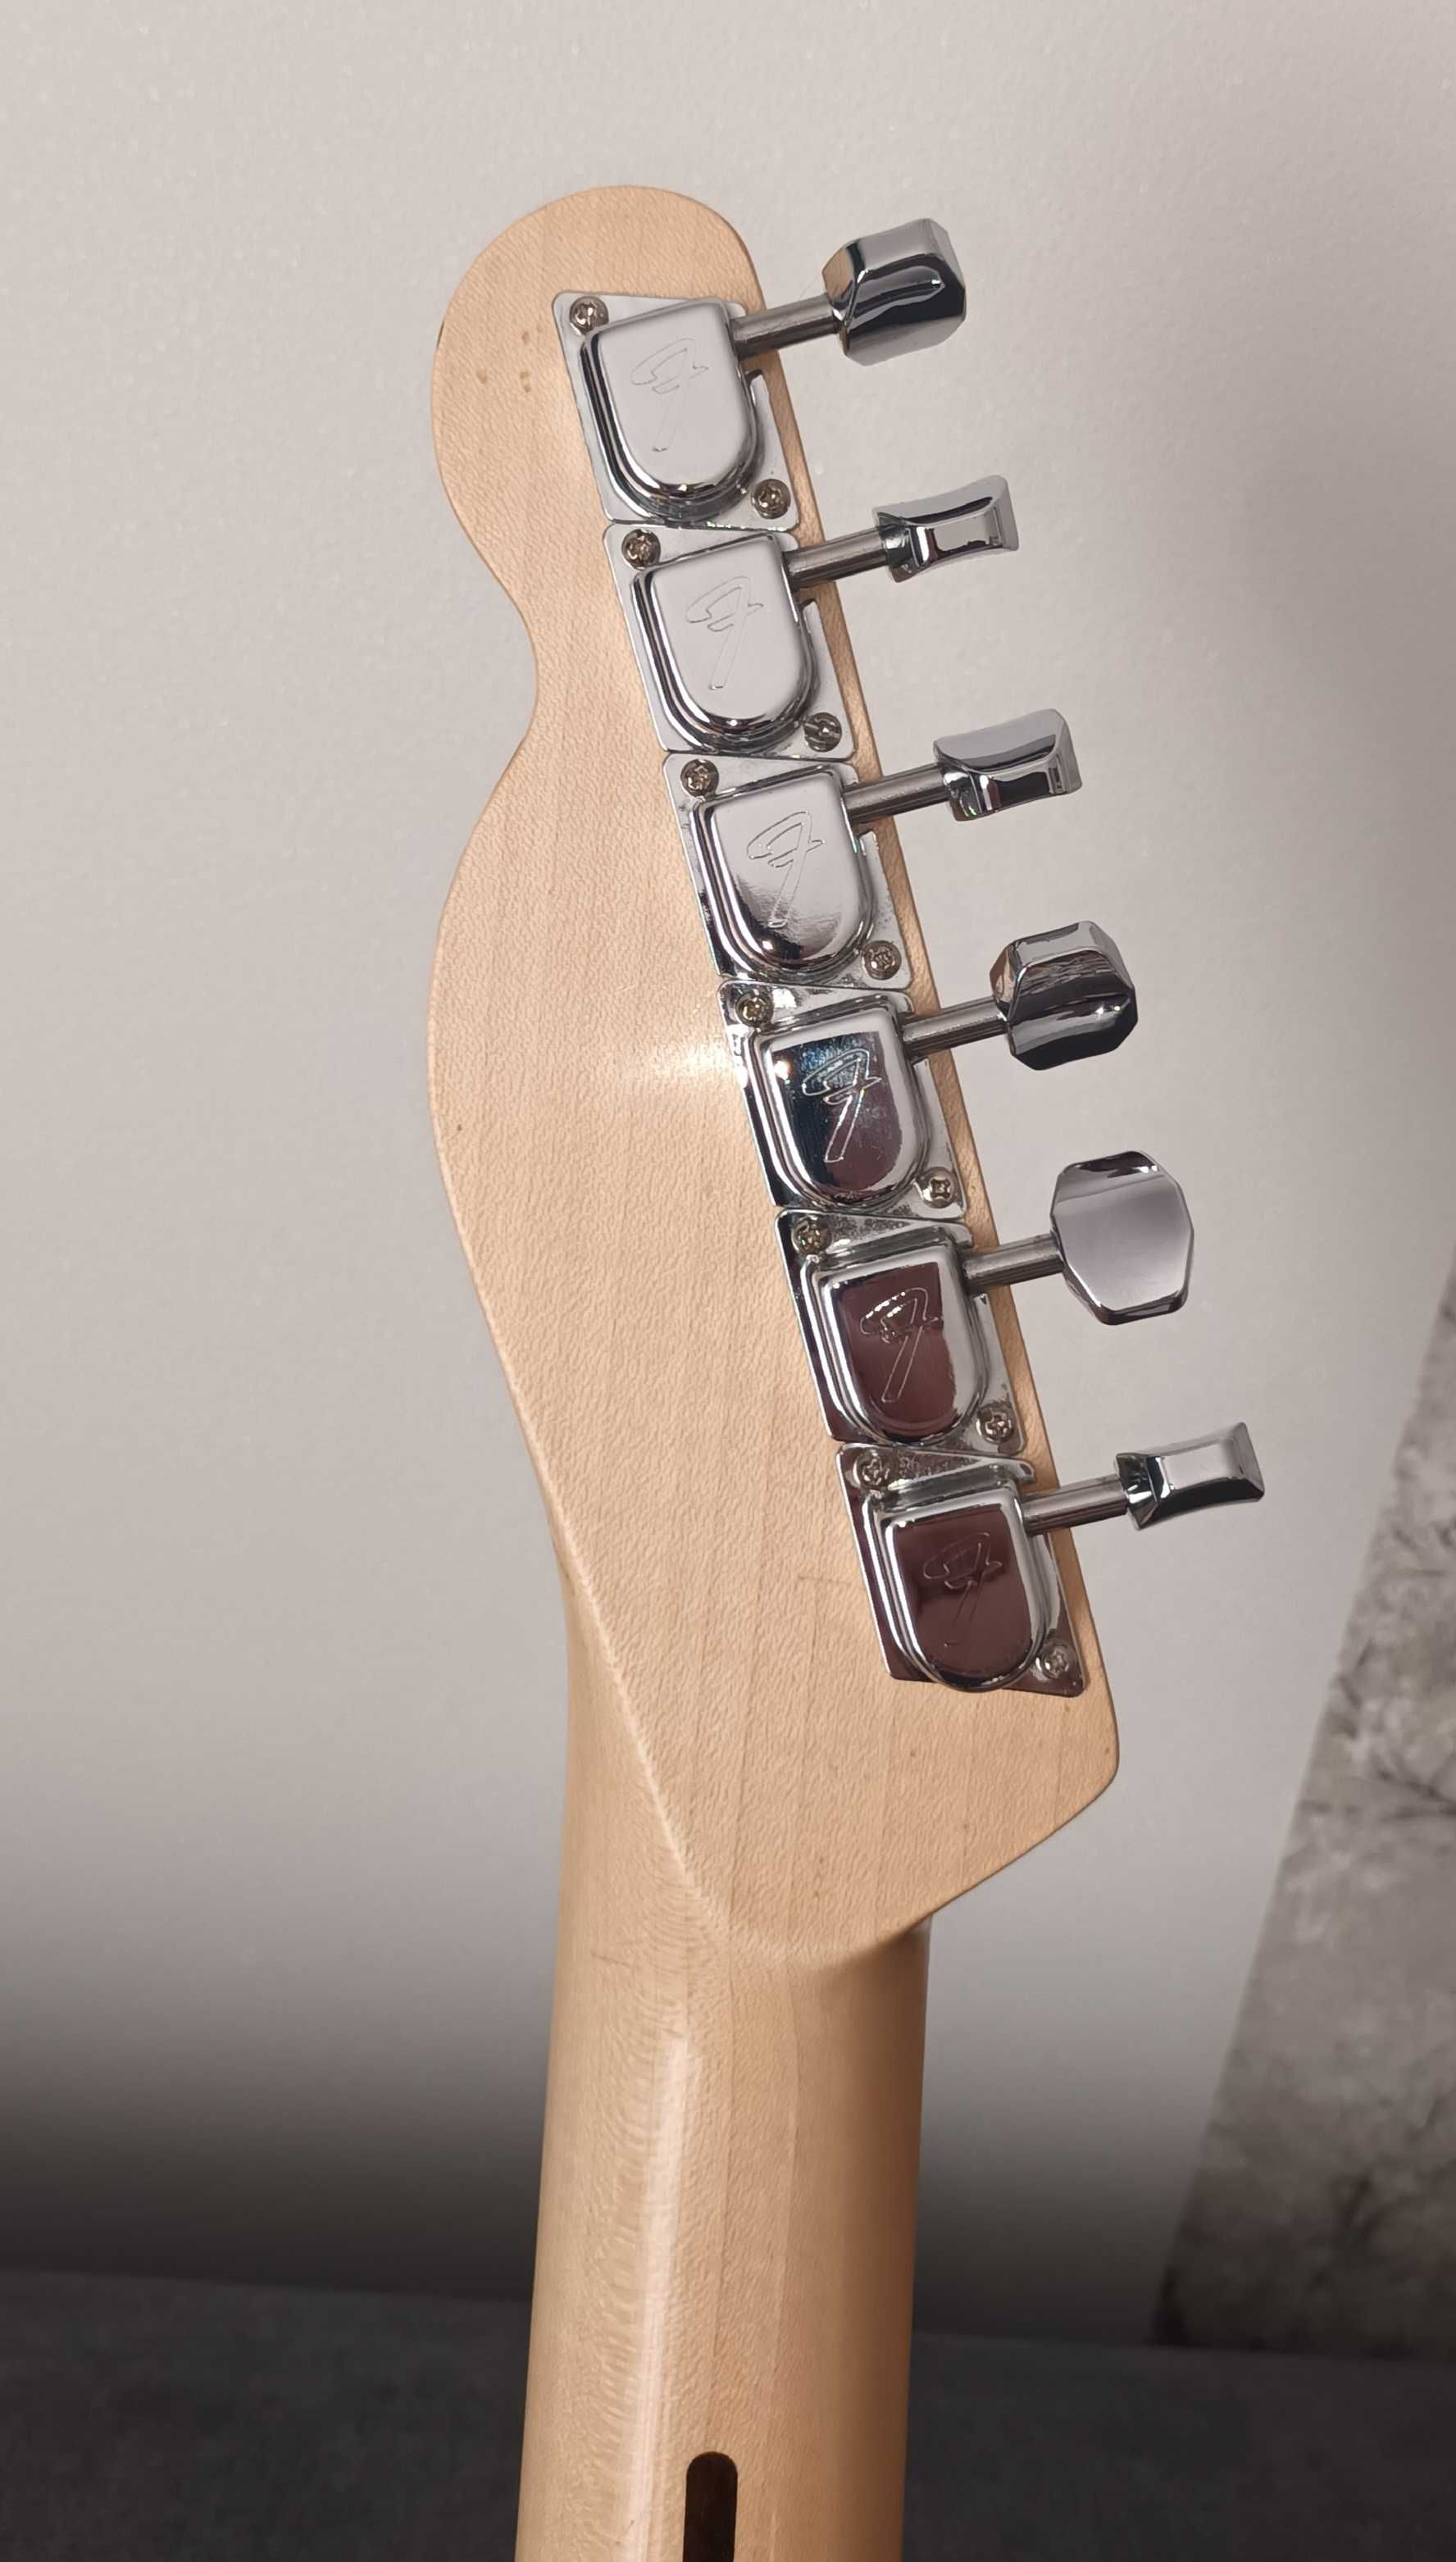 Gitara lutnicza, crafted in Poland